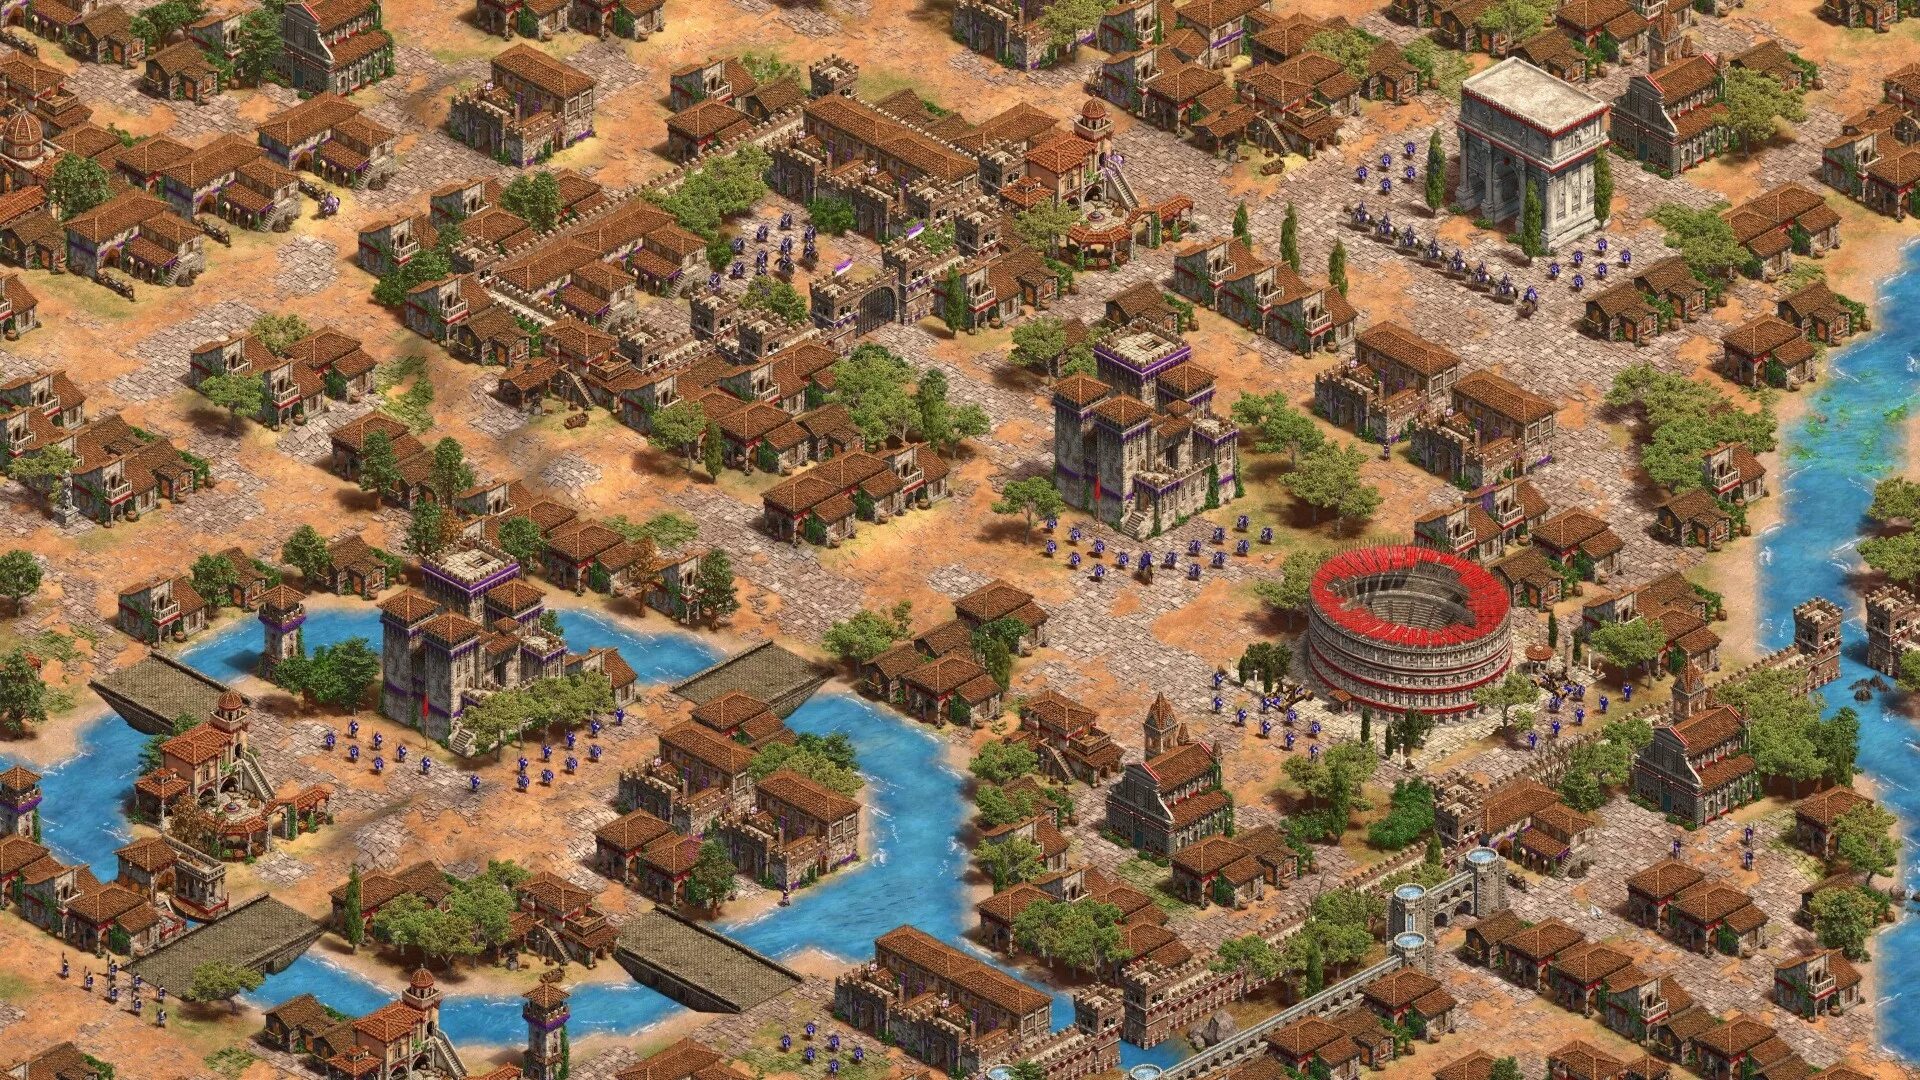 Age pf. Age of Empires 2 Definitive Edition. Эпоха империй Definitive Edition. Age of Empires 2 Definitive Edition последняя версия. Эйдж оф Империя 2 Дефинитив эдишн.